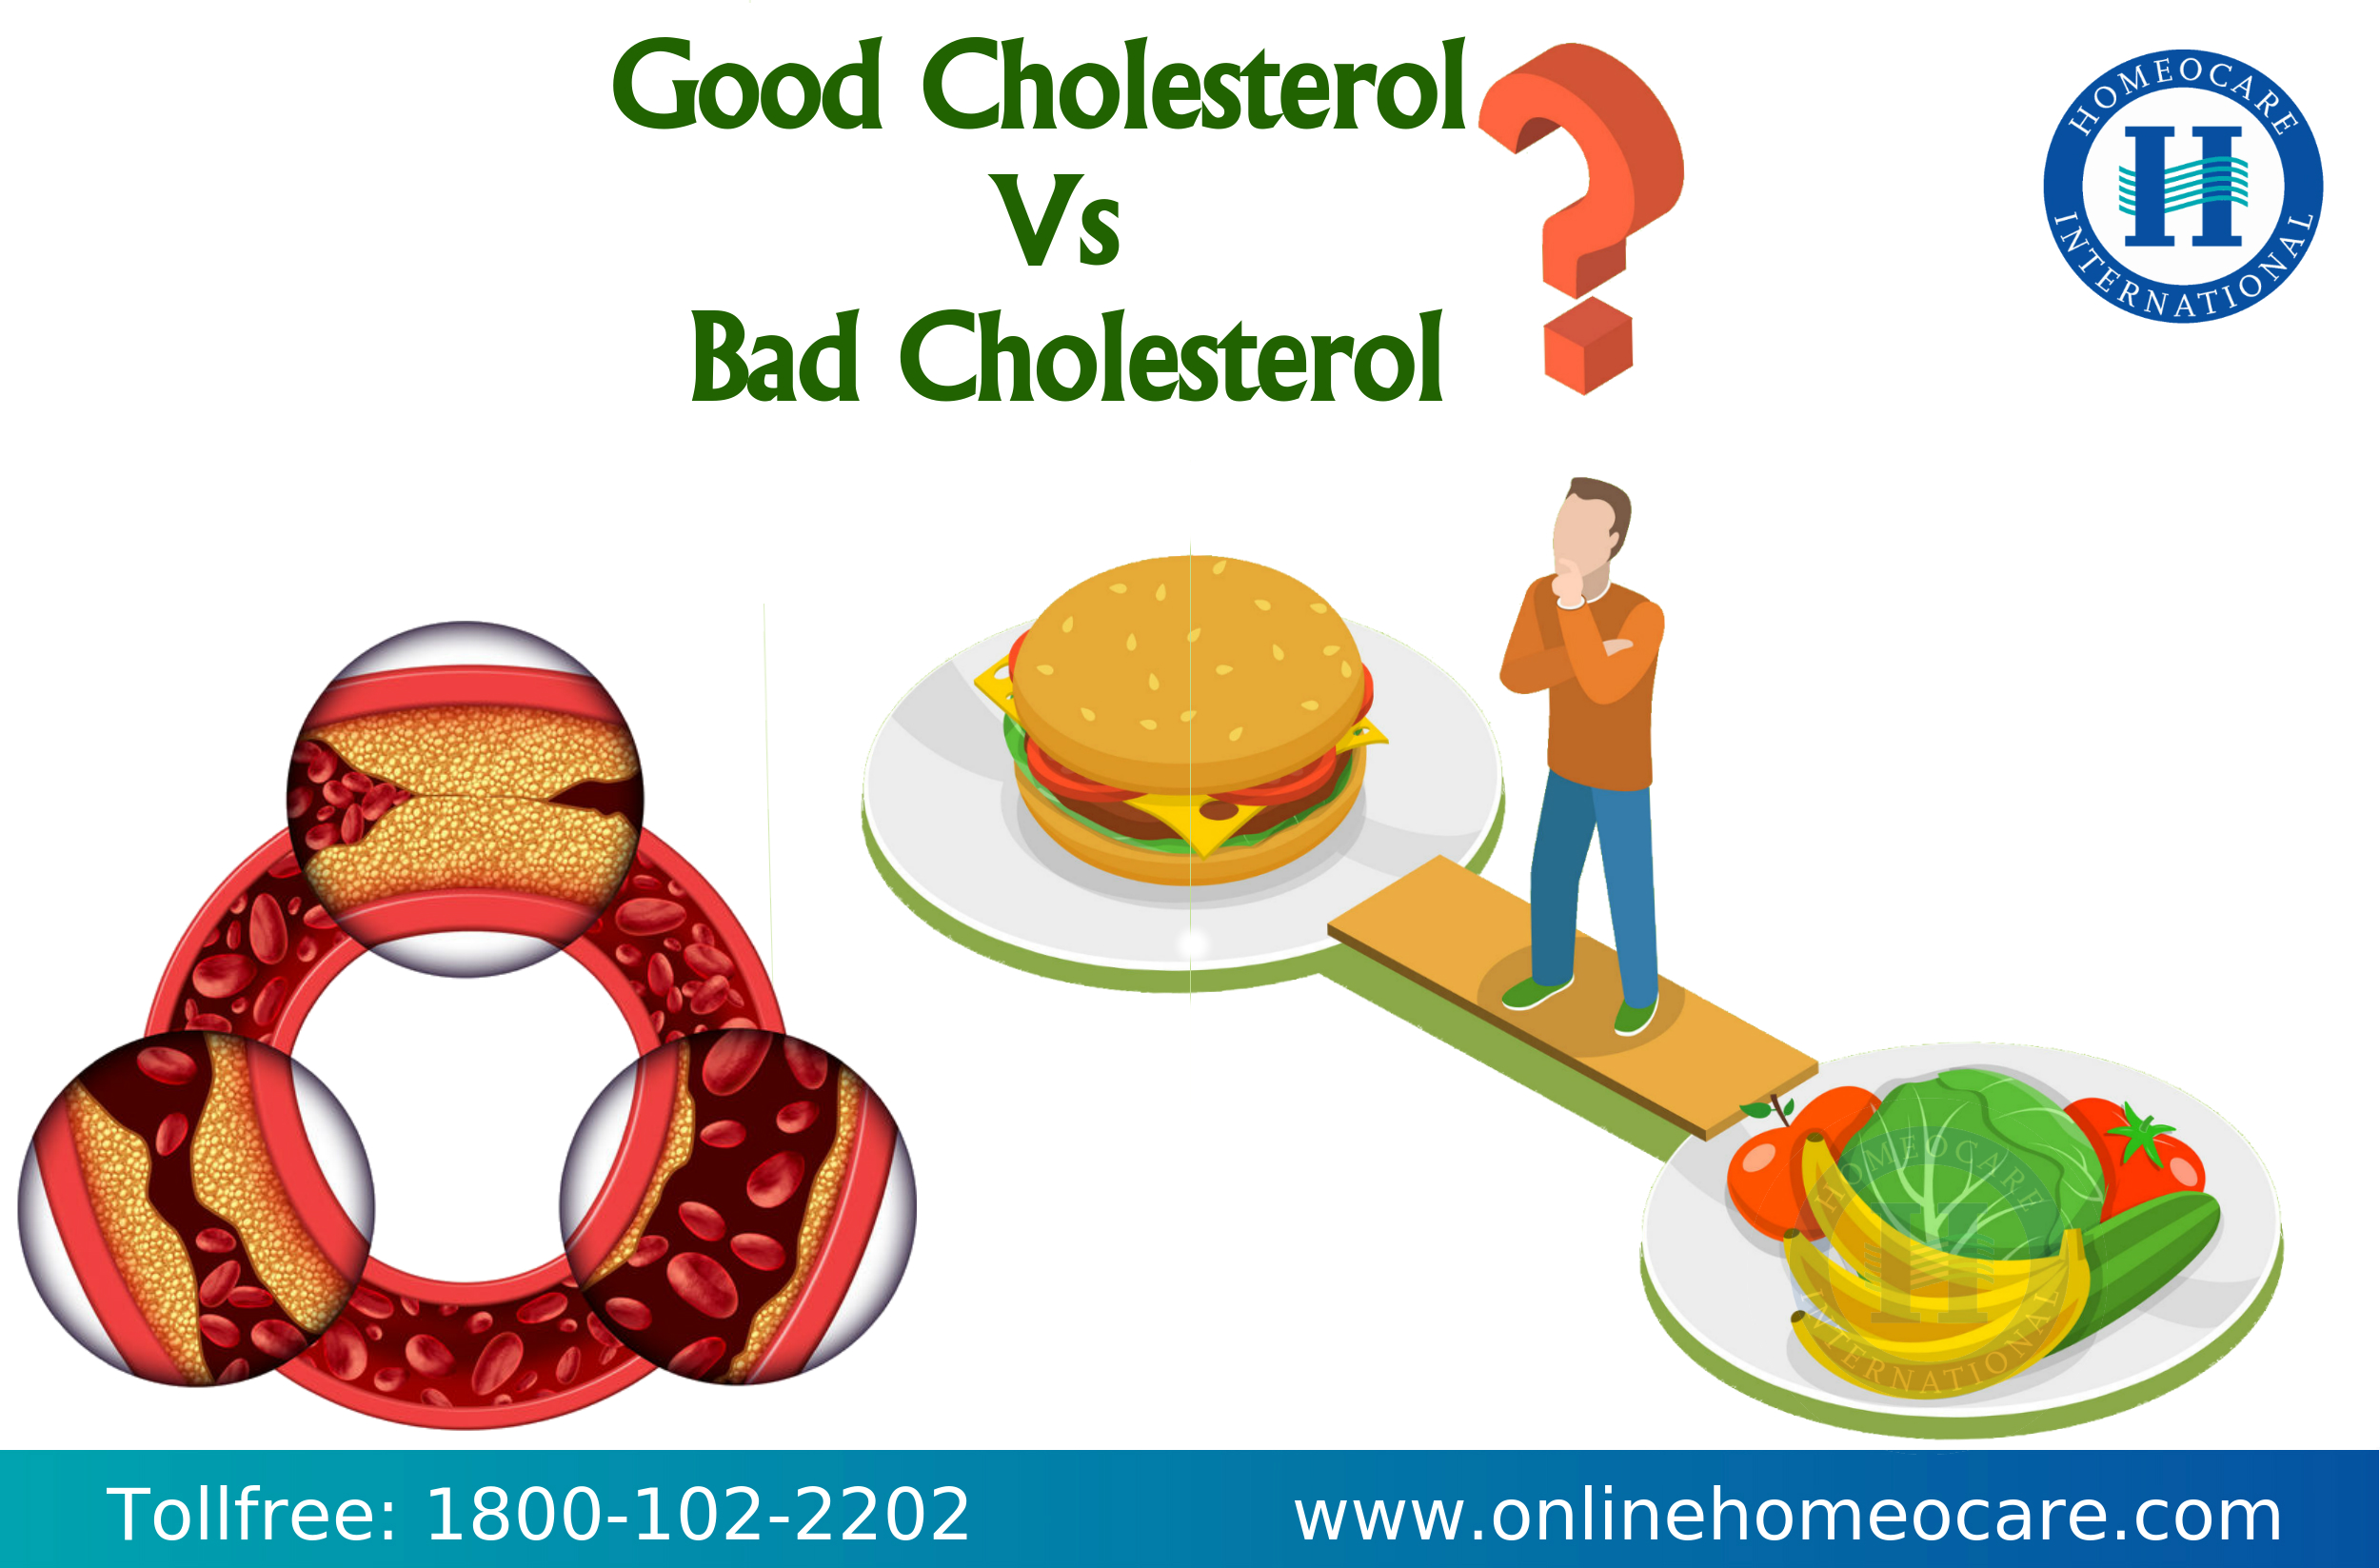 Good vs Bad Cholesterol